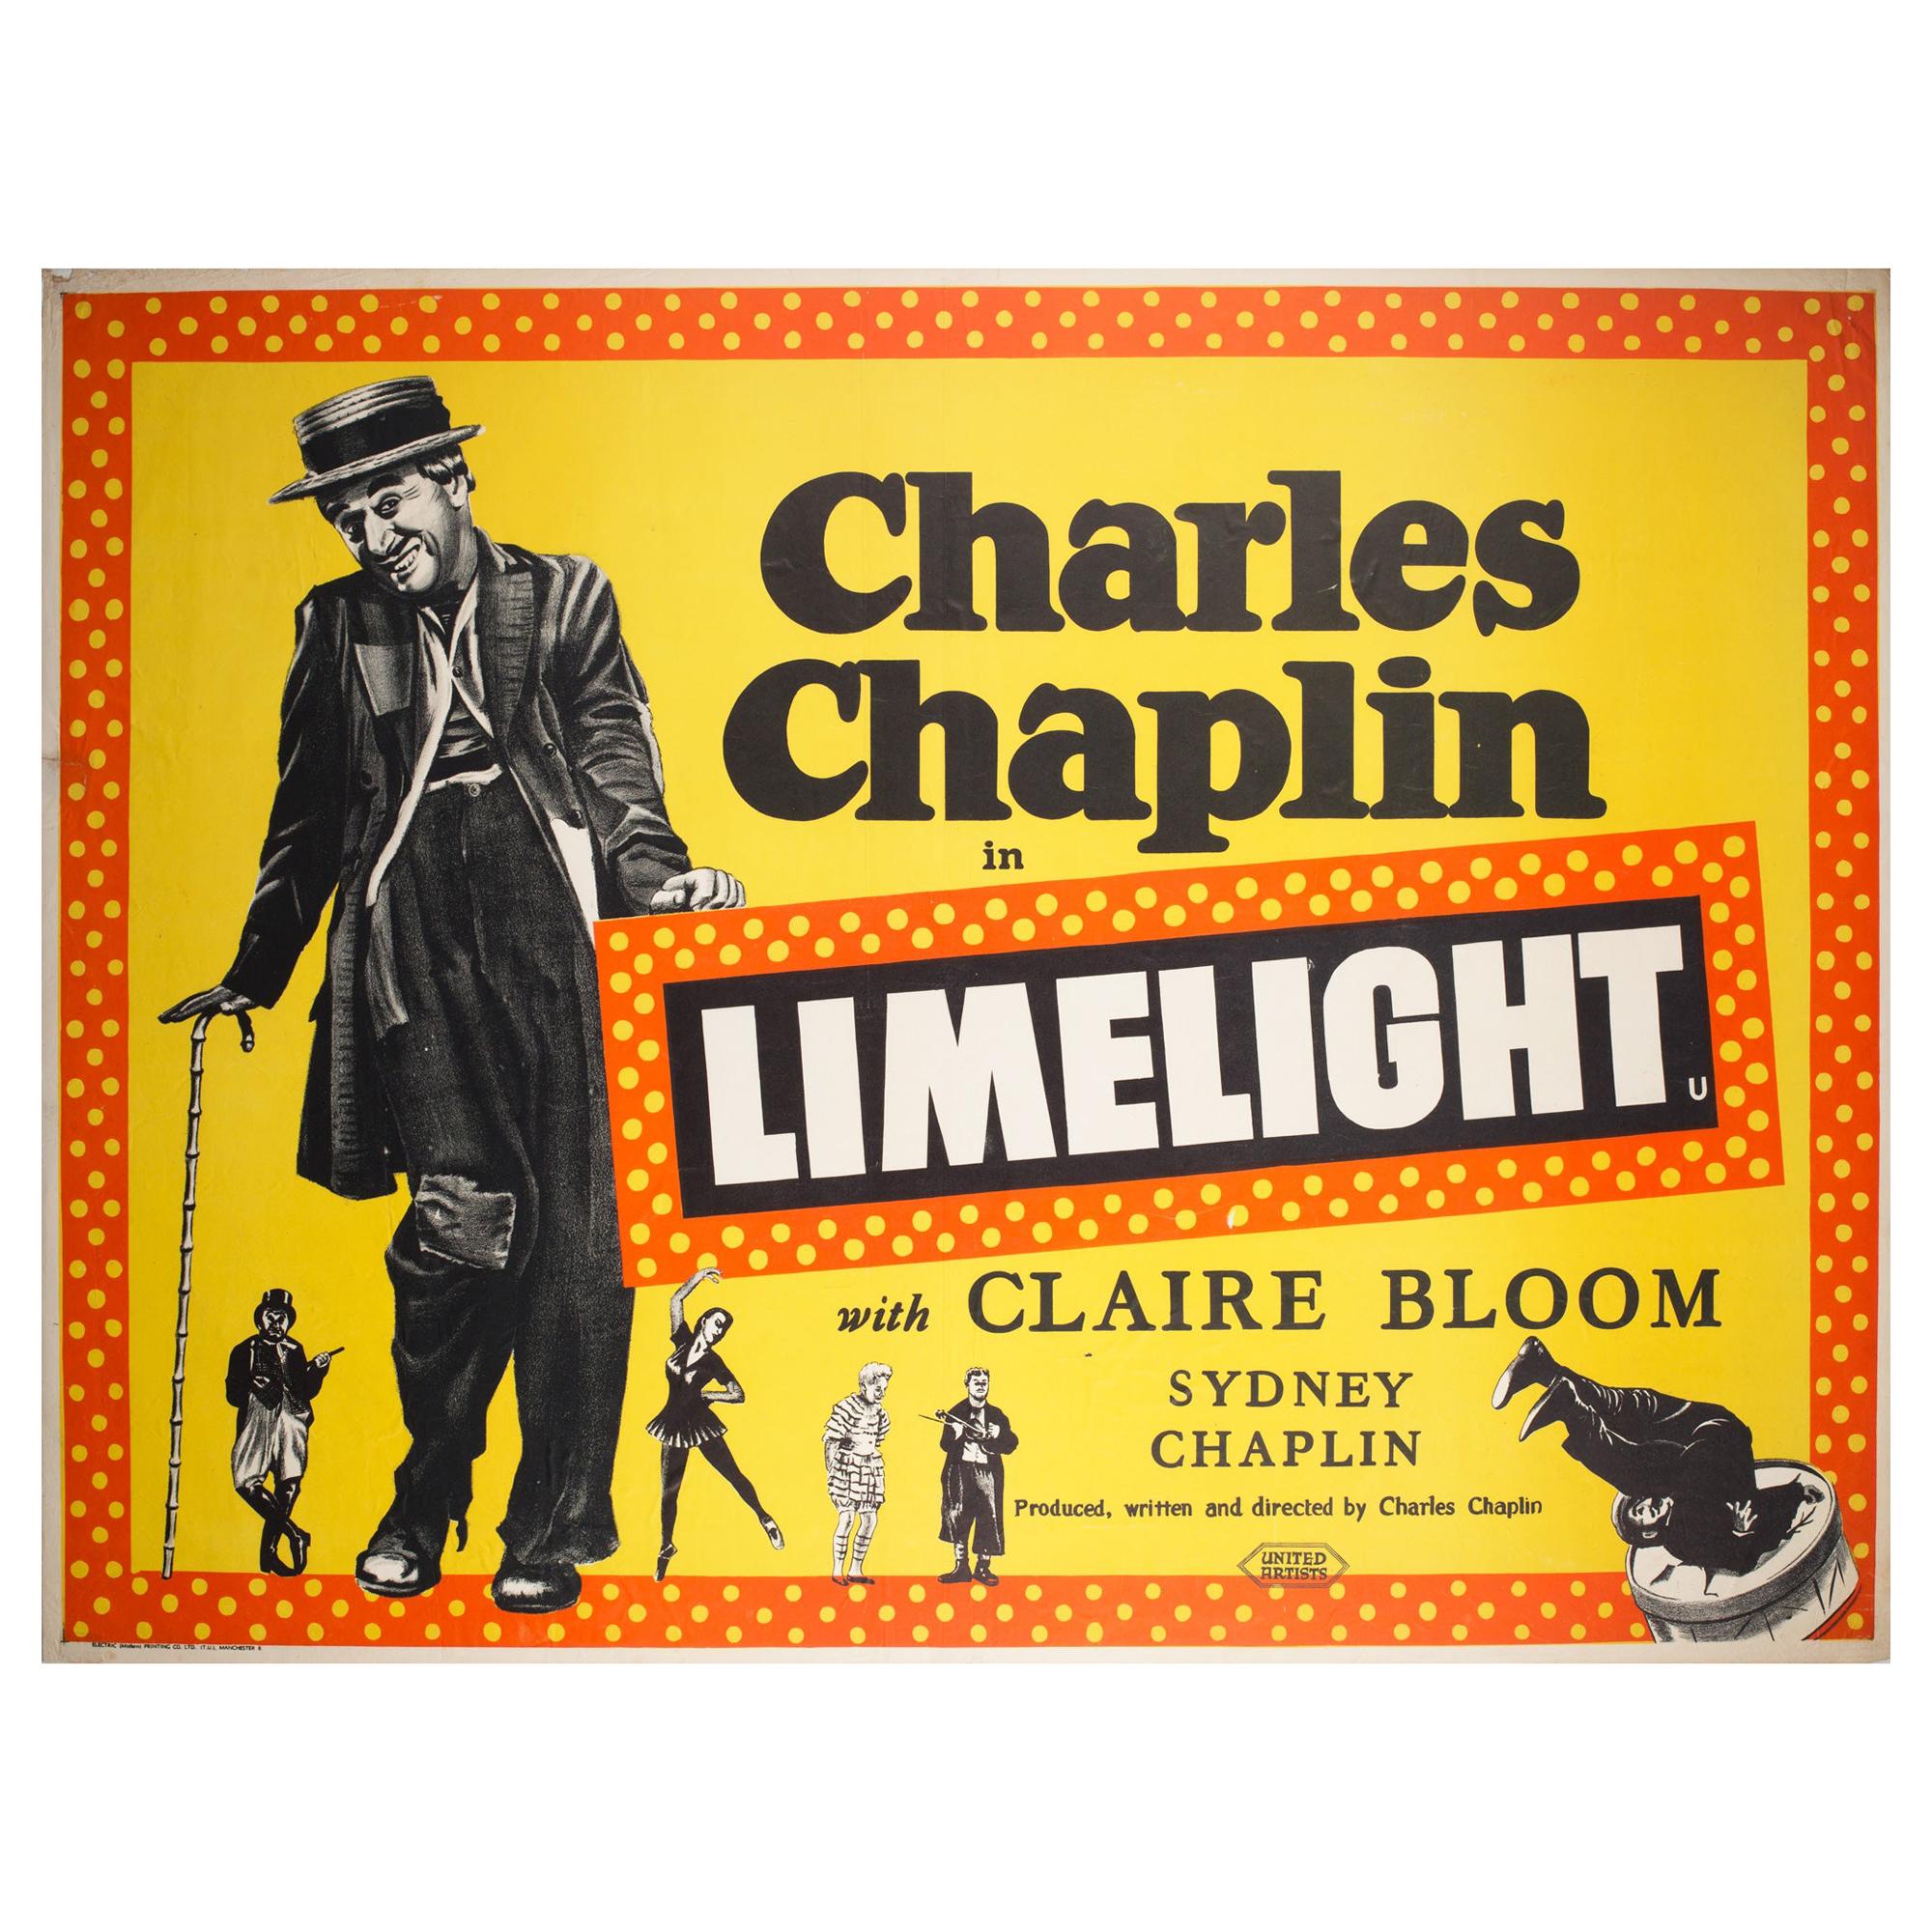 Limelight R1950s UK Quad Charles Chaplin Film Poster For Sale